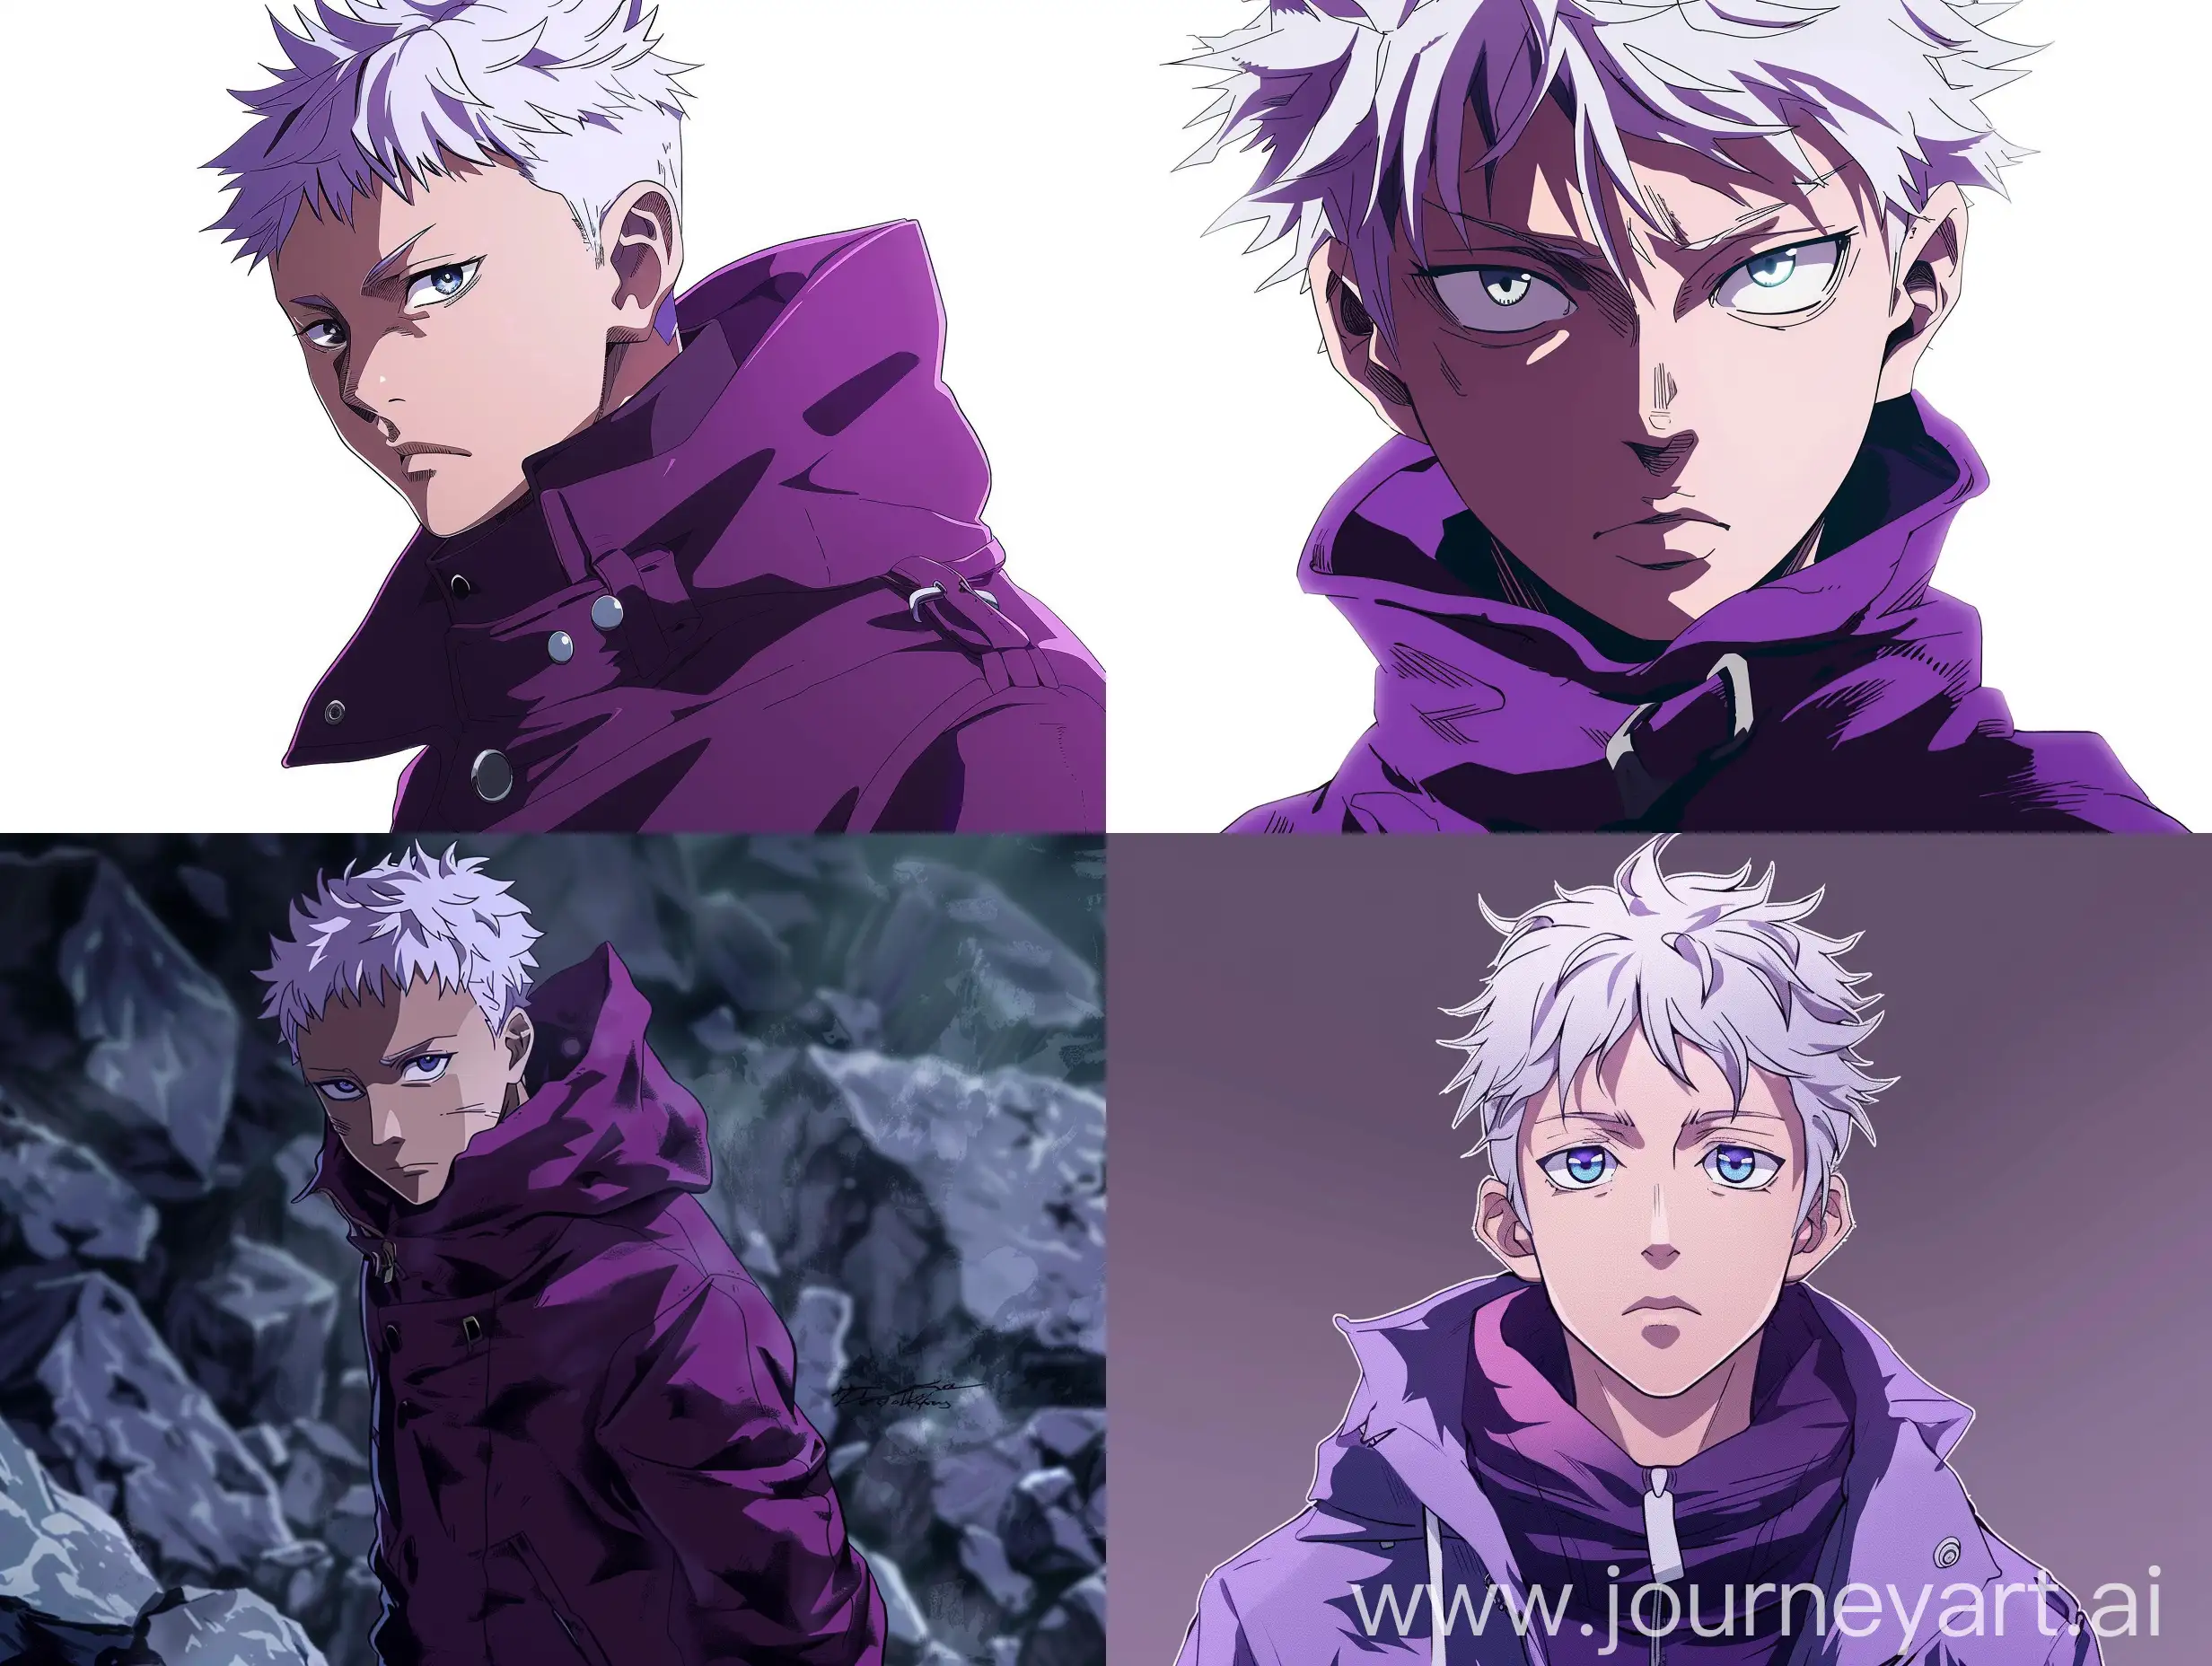 18-year-old boy, with white skin, white hair cut medium. He has blue eyes, white eyebrows. Jujutsu kaisen anime 2d style. Wearing a purple coat